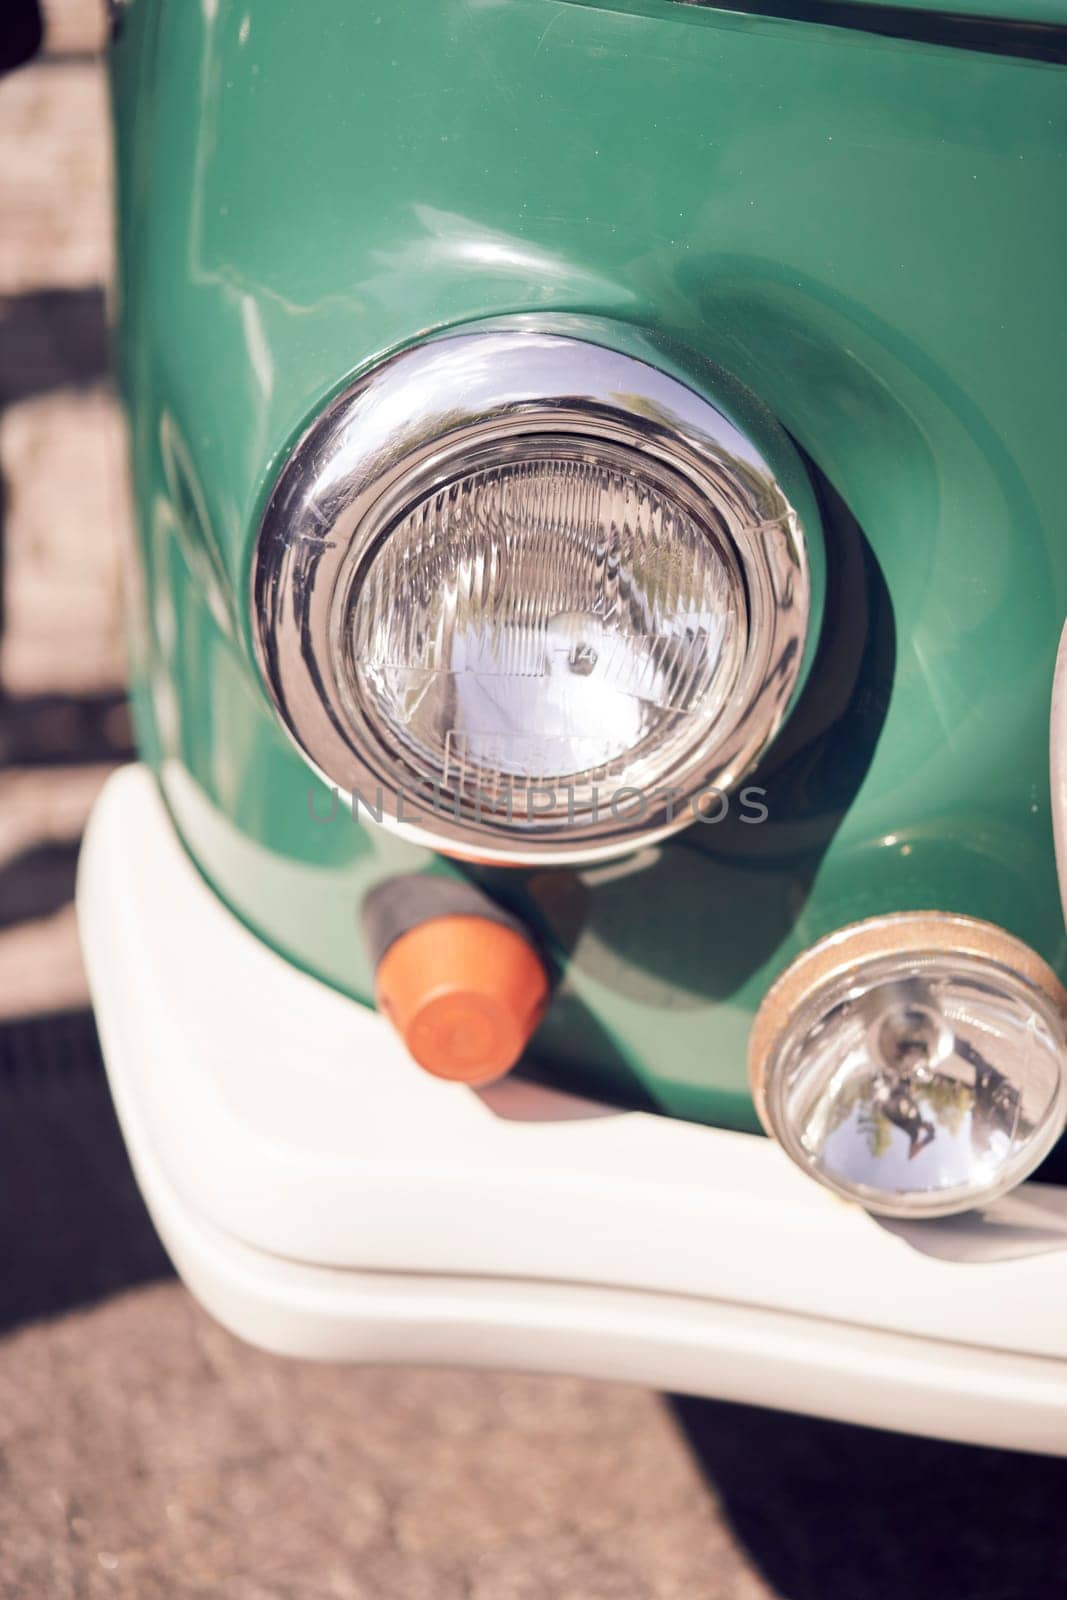 Closeup of vintage cars headlight and chrome bumper, showcasing classic automotive design details